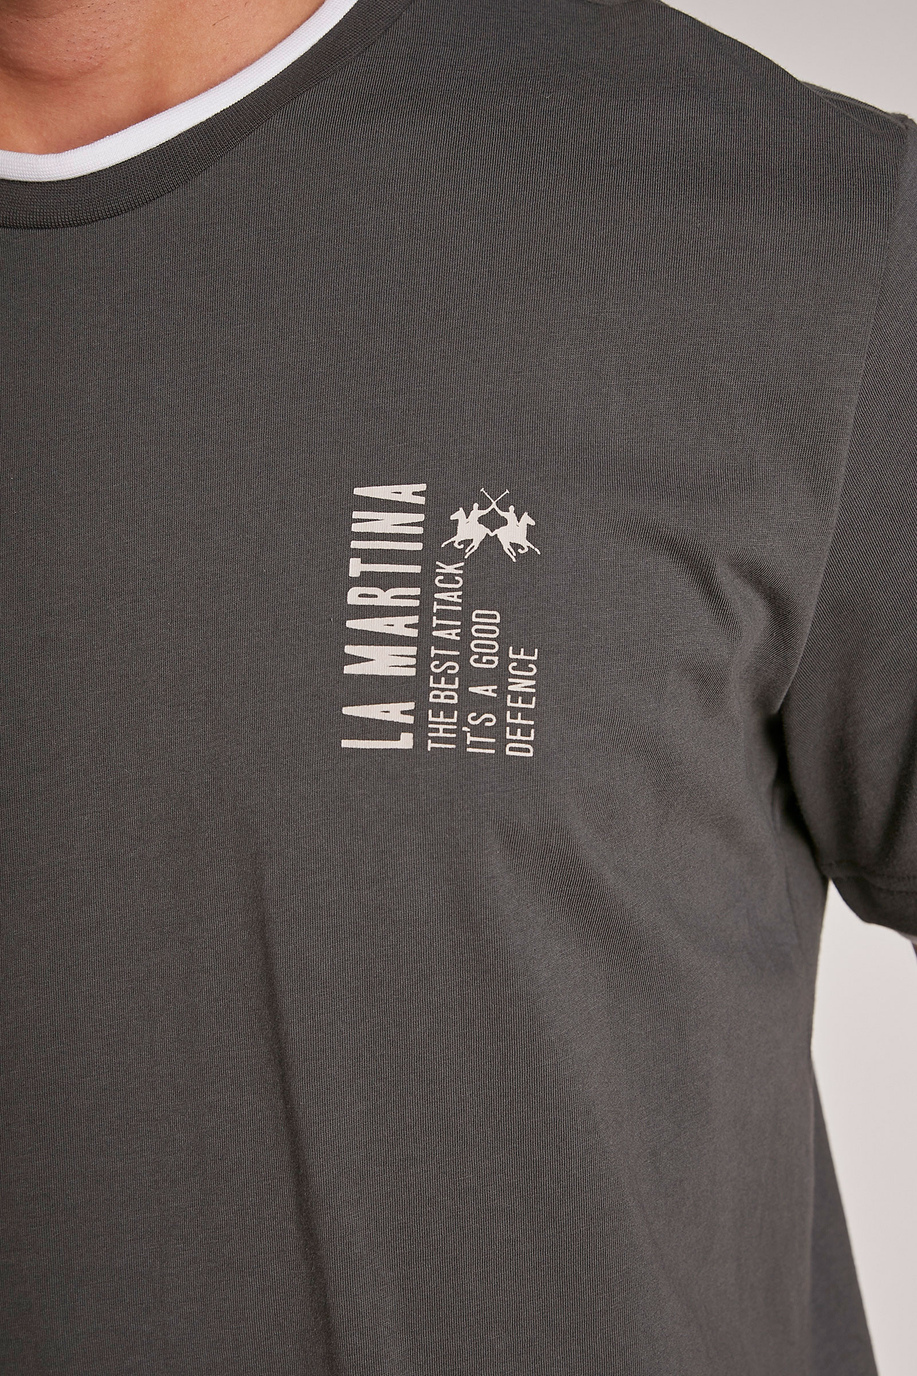 Men's short-sleeved regular-fit cotton T-shirt